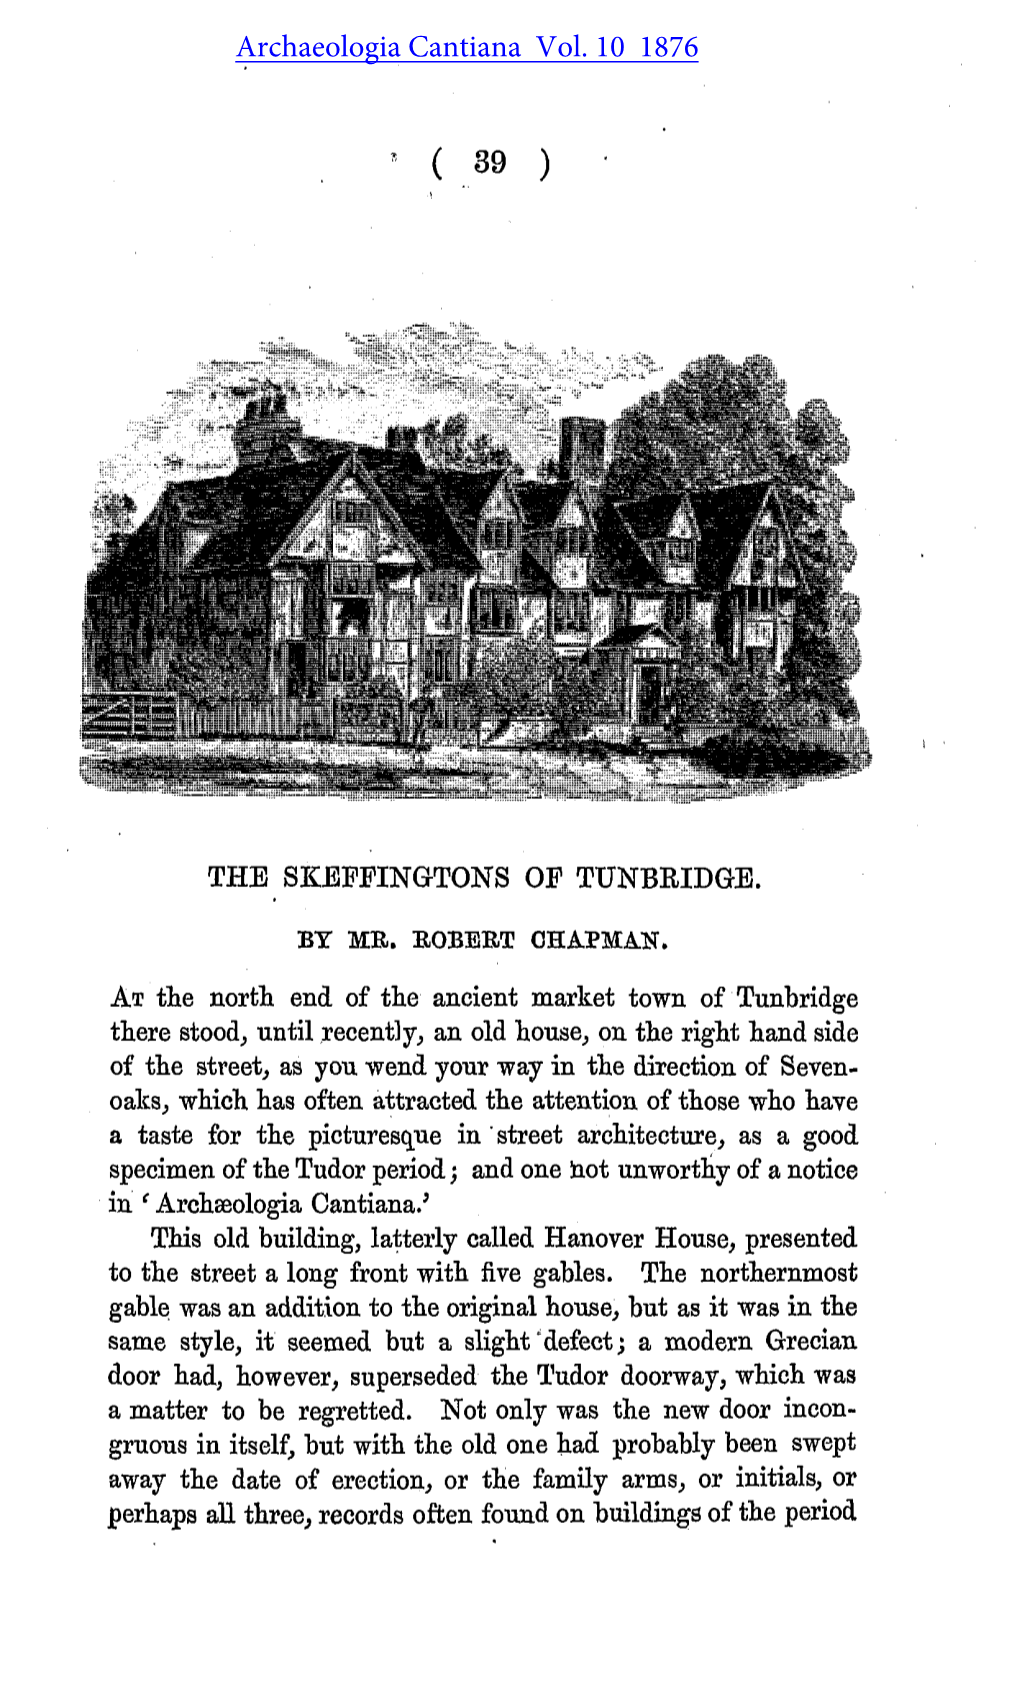 The Skeffingtons of Tunbridge (Sic Tonbridge)